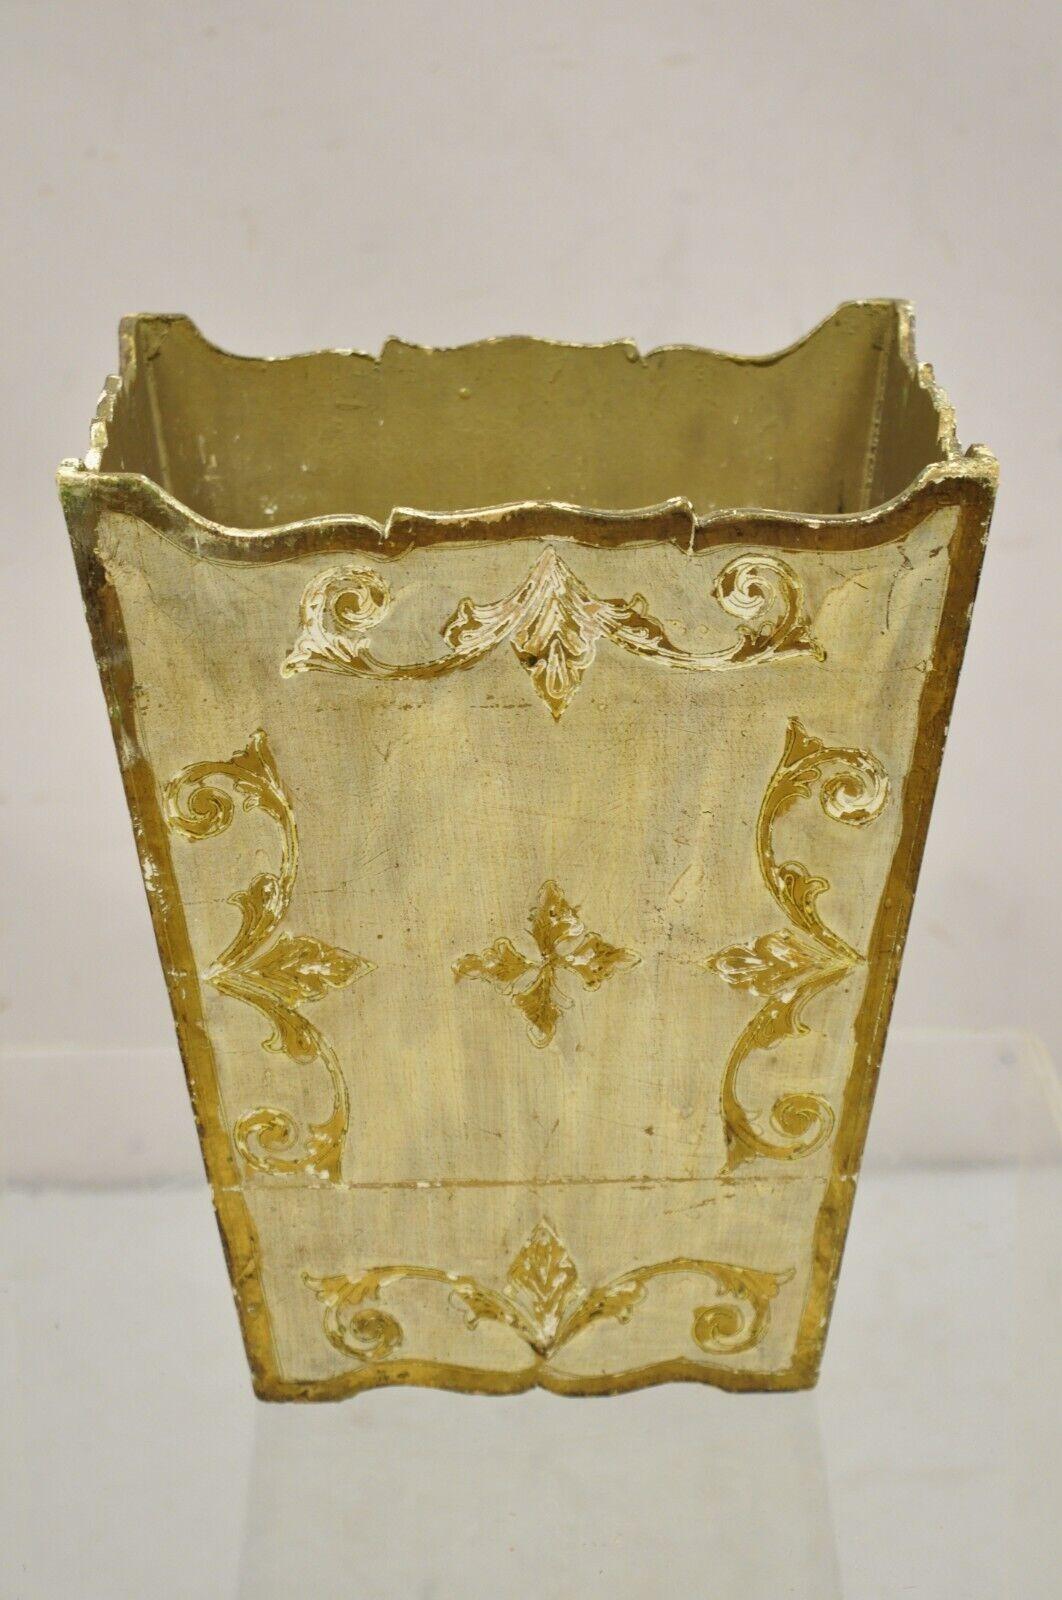 Vintage Italian Florentine Wooden Gold Gilt Wastebasket Trash Can. Circa Mid 20th Century. Dimensions : 12